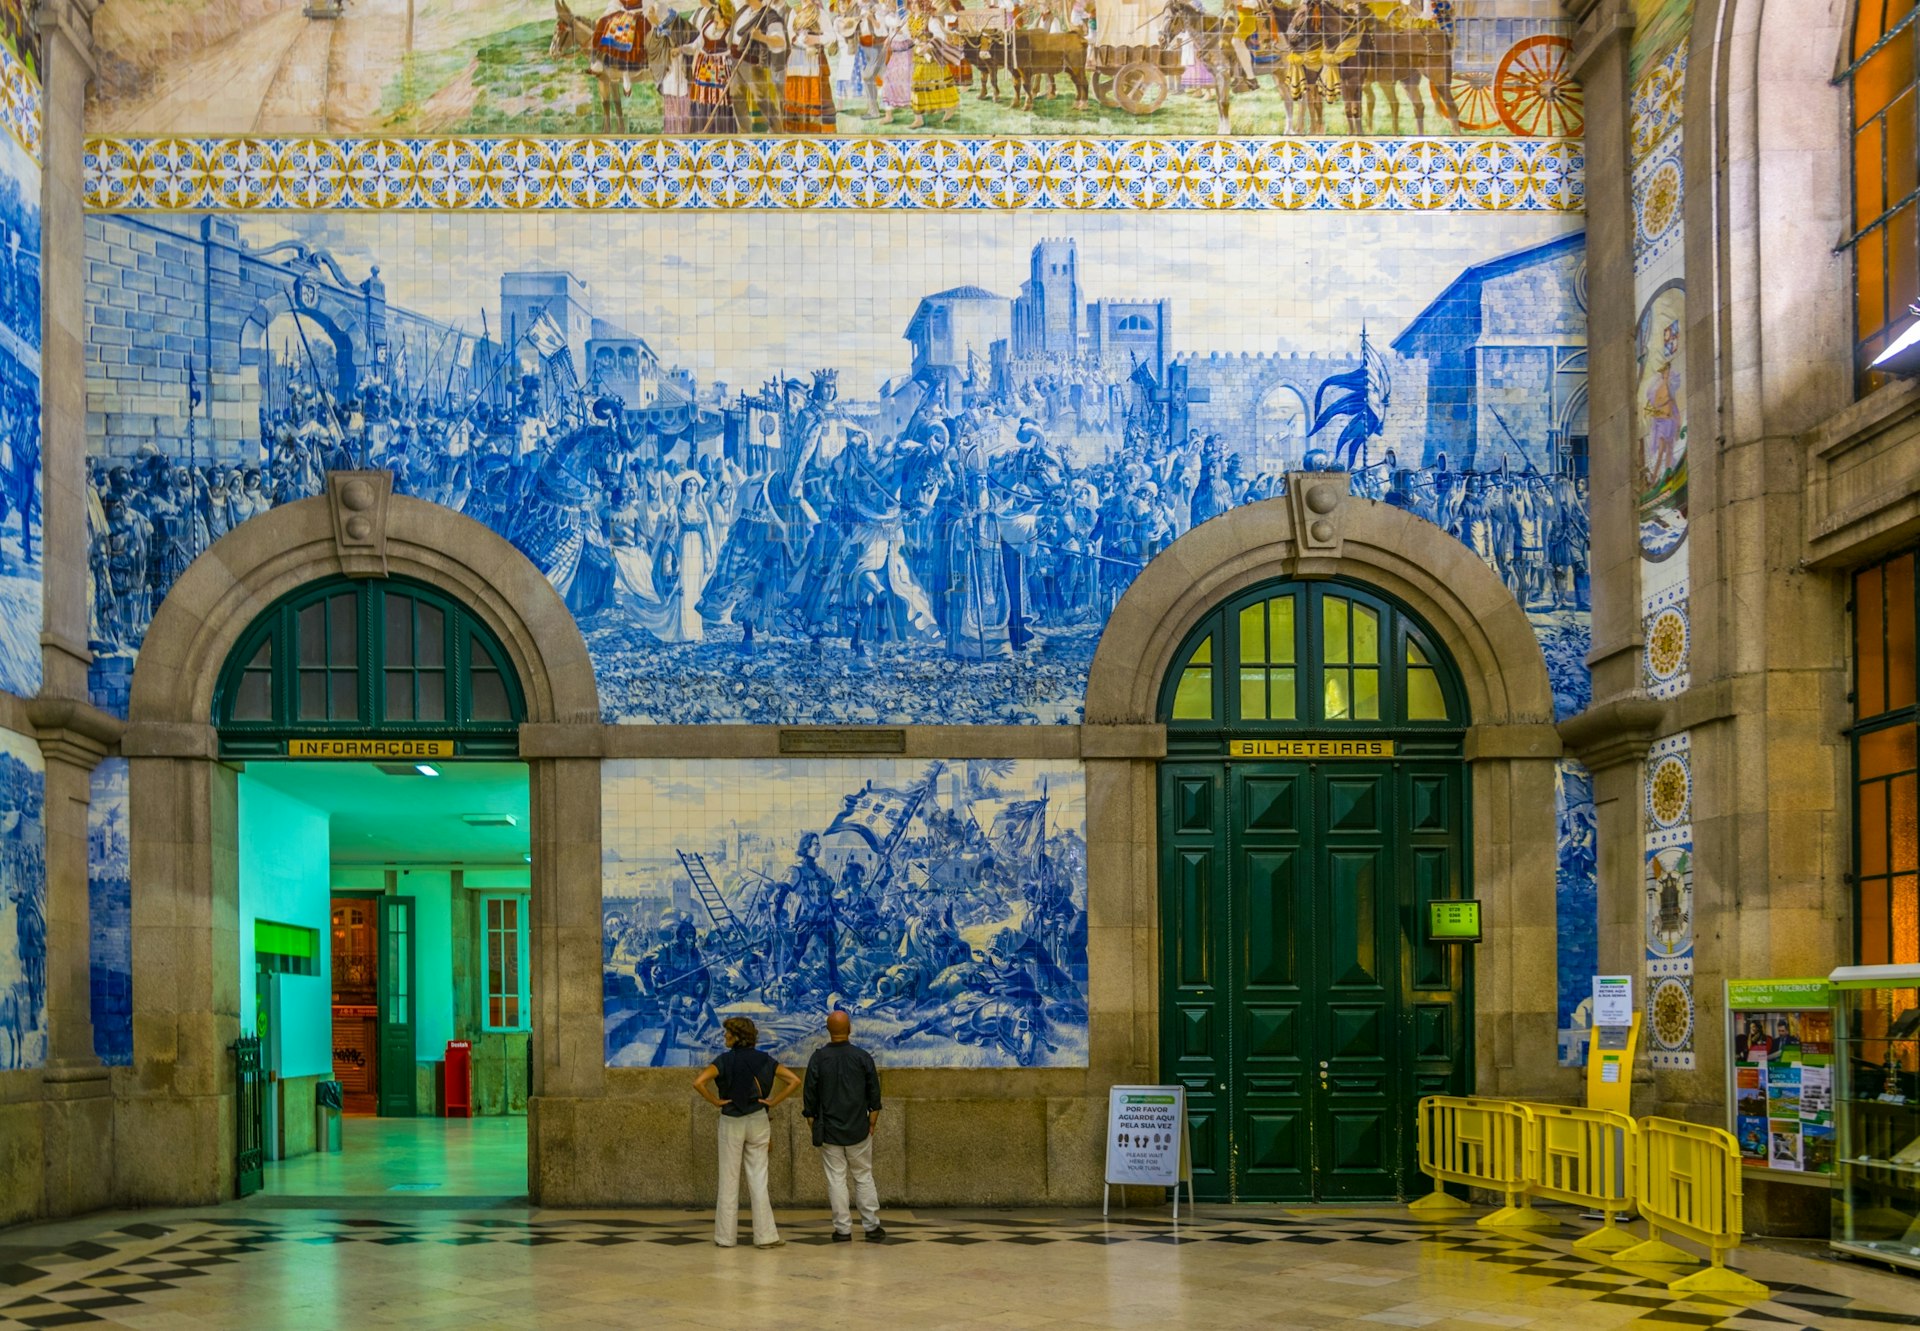 Azulejos mosaics inside the main train station at Porto